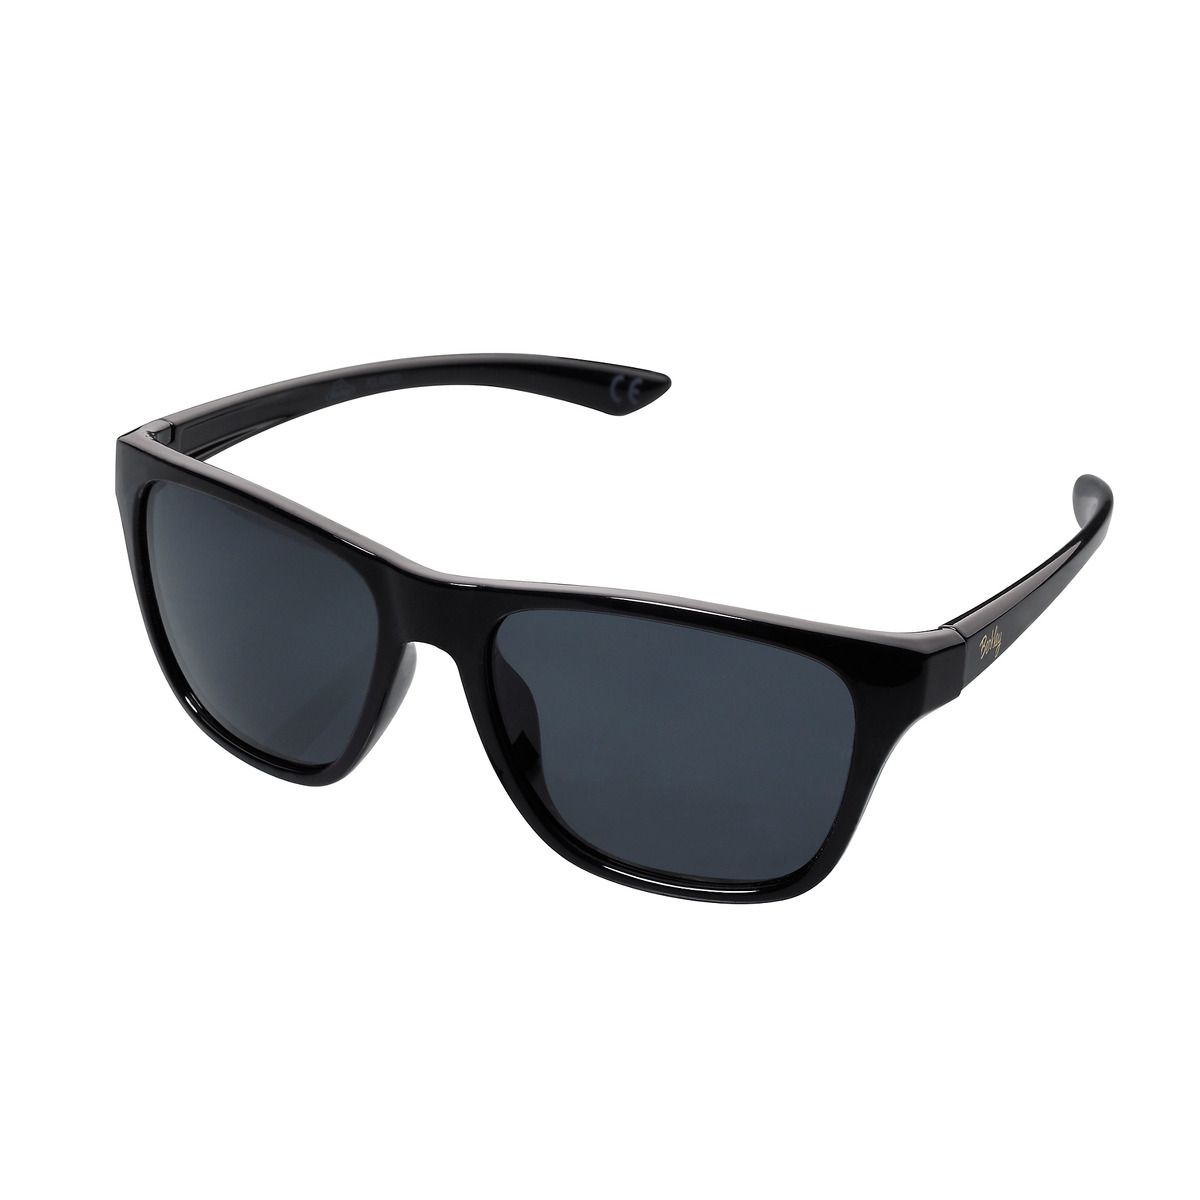 Berkley Urbn Sunglasses - Black/Smoke